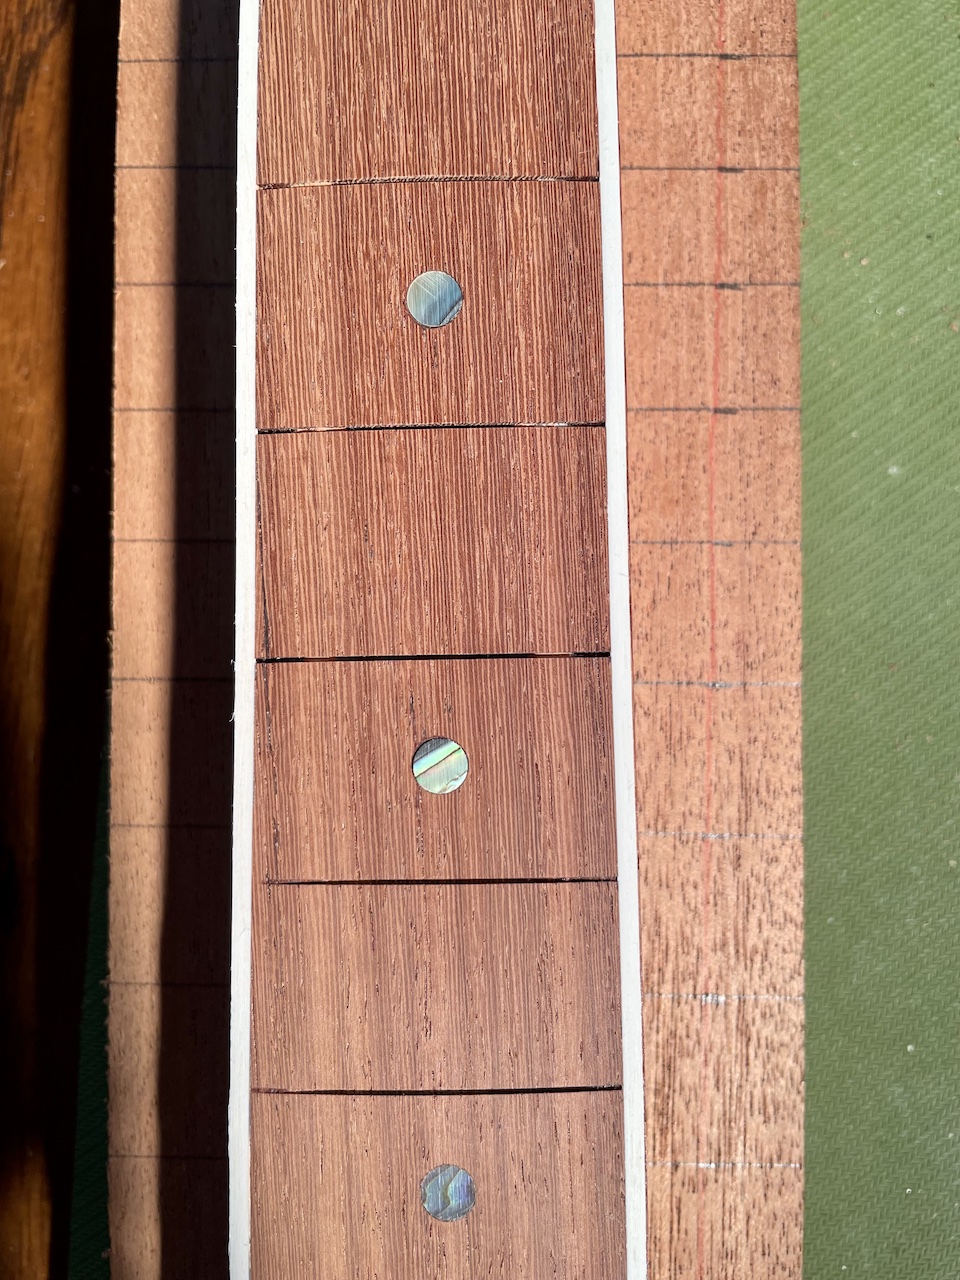 guitar fingerboard with binding